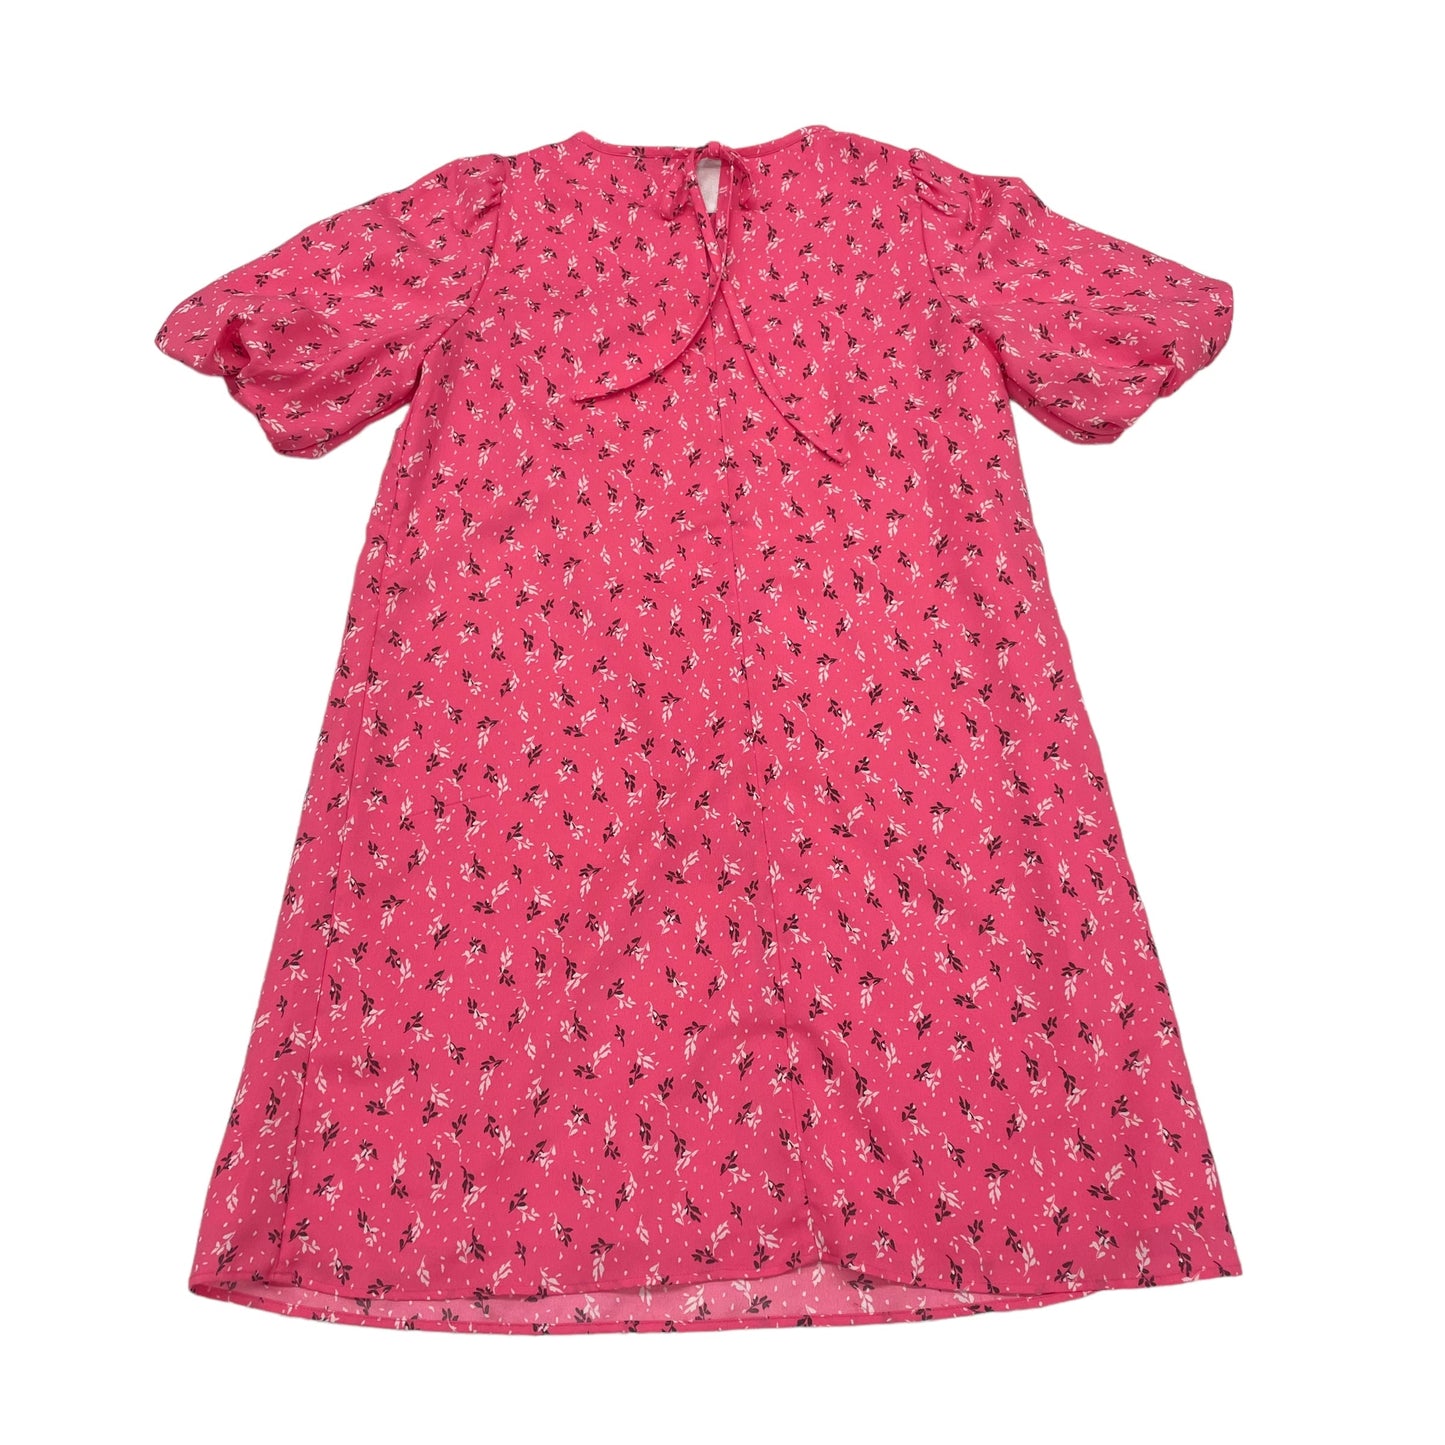 Dress Casual Short By Ann Taylor  Size: Petite   Xs